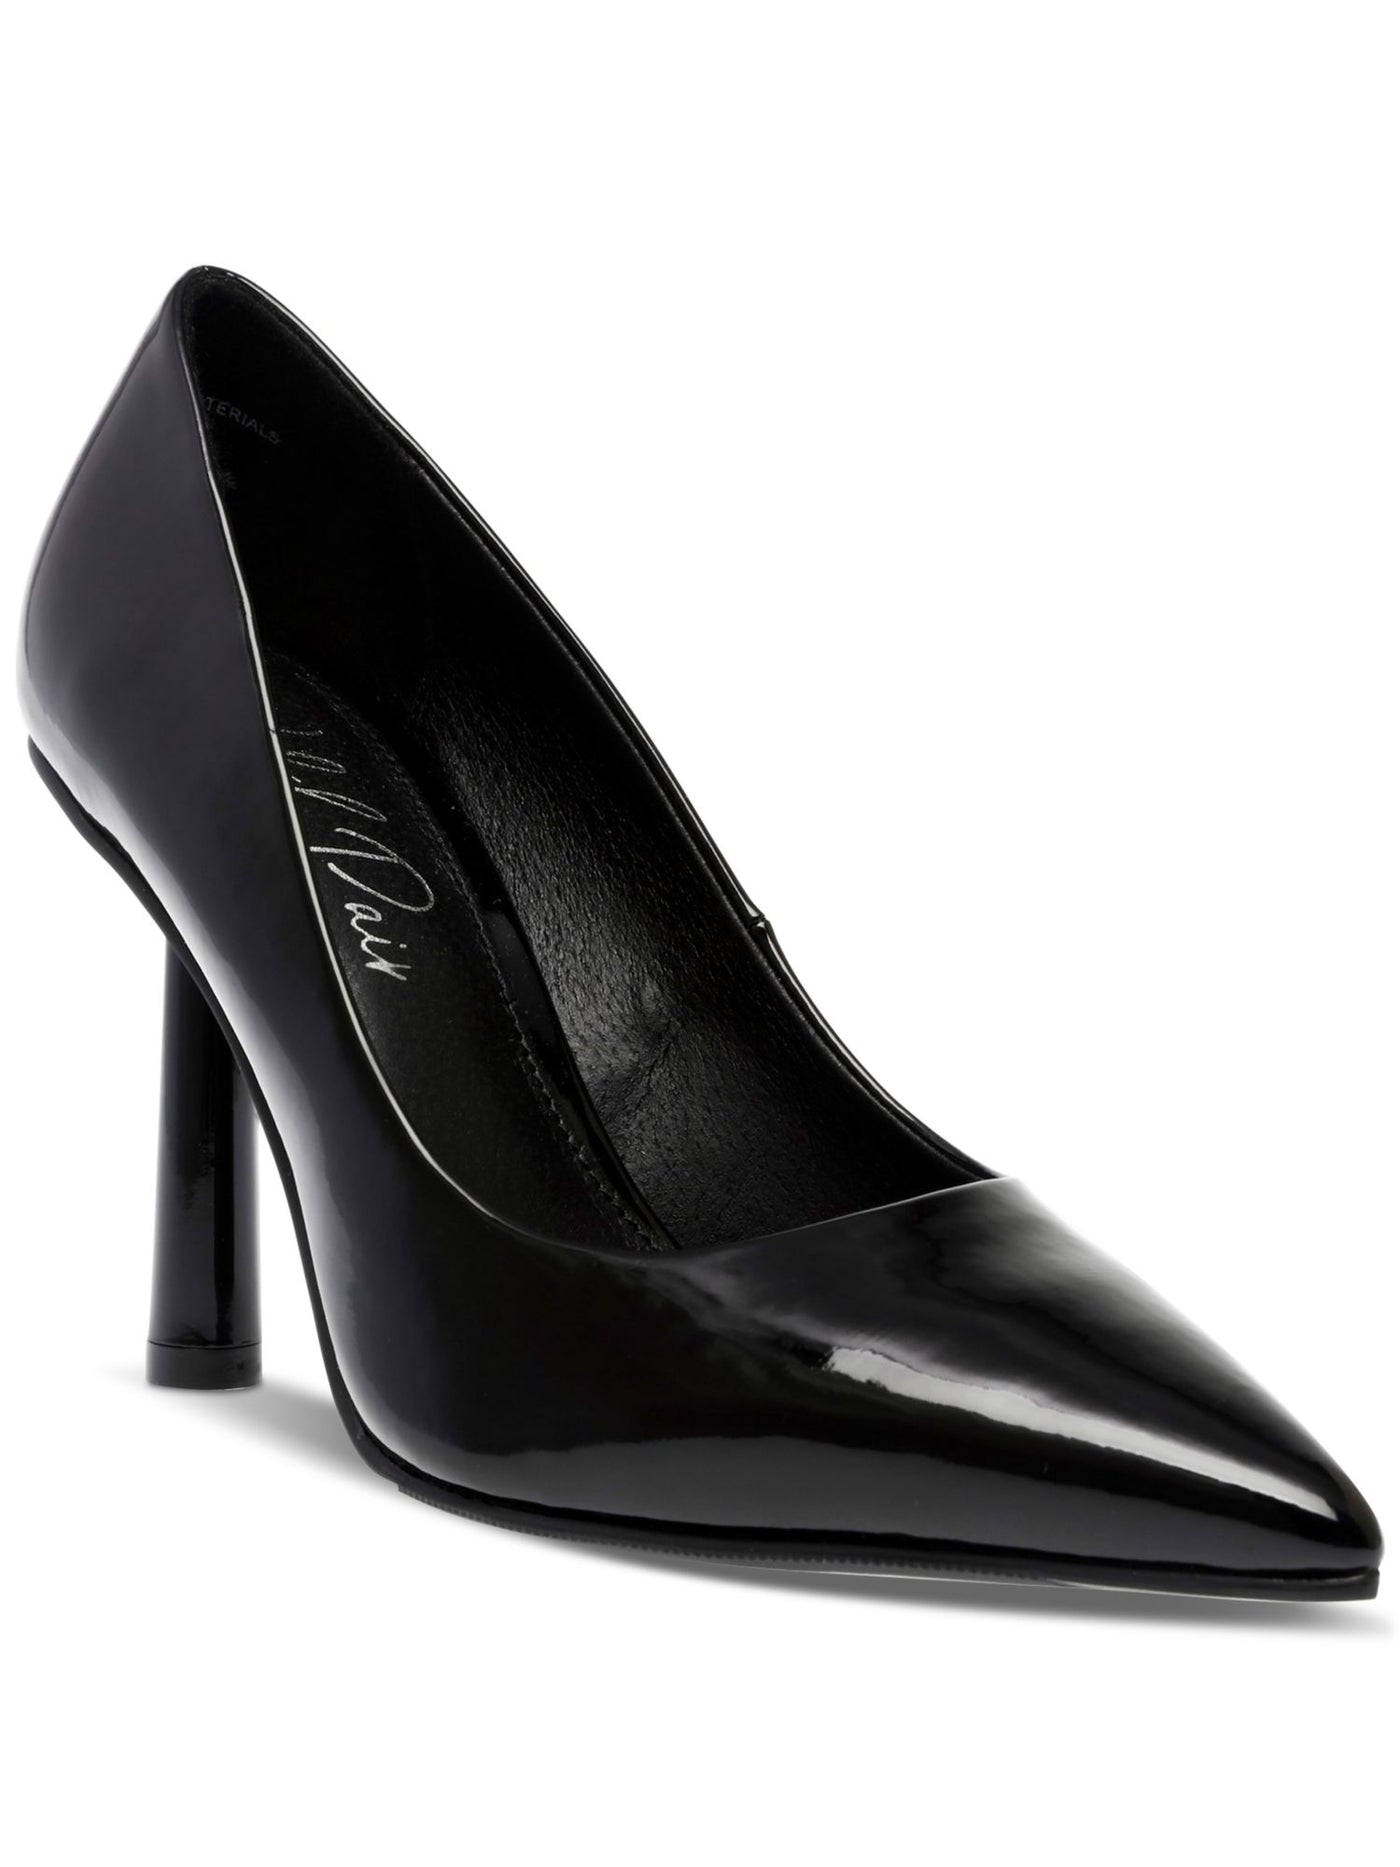 WILD PAIR Womens Black Slip Resistant Comfort Taraa Pointed Toe Stiletto Slip On Pumps Shoes 6 M